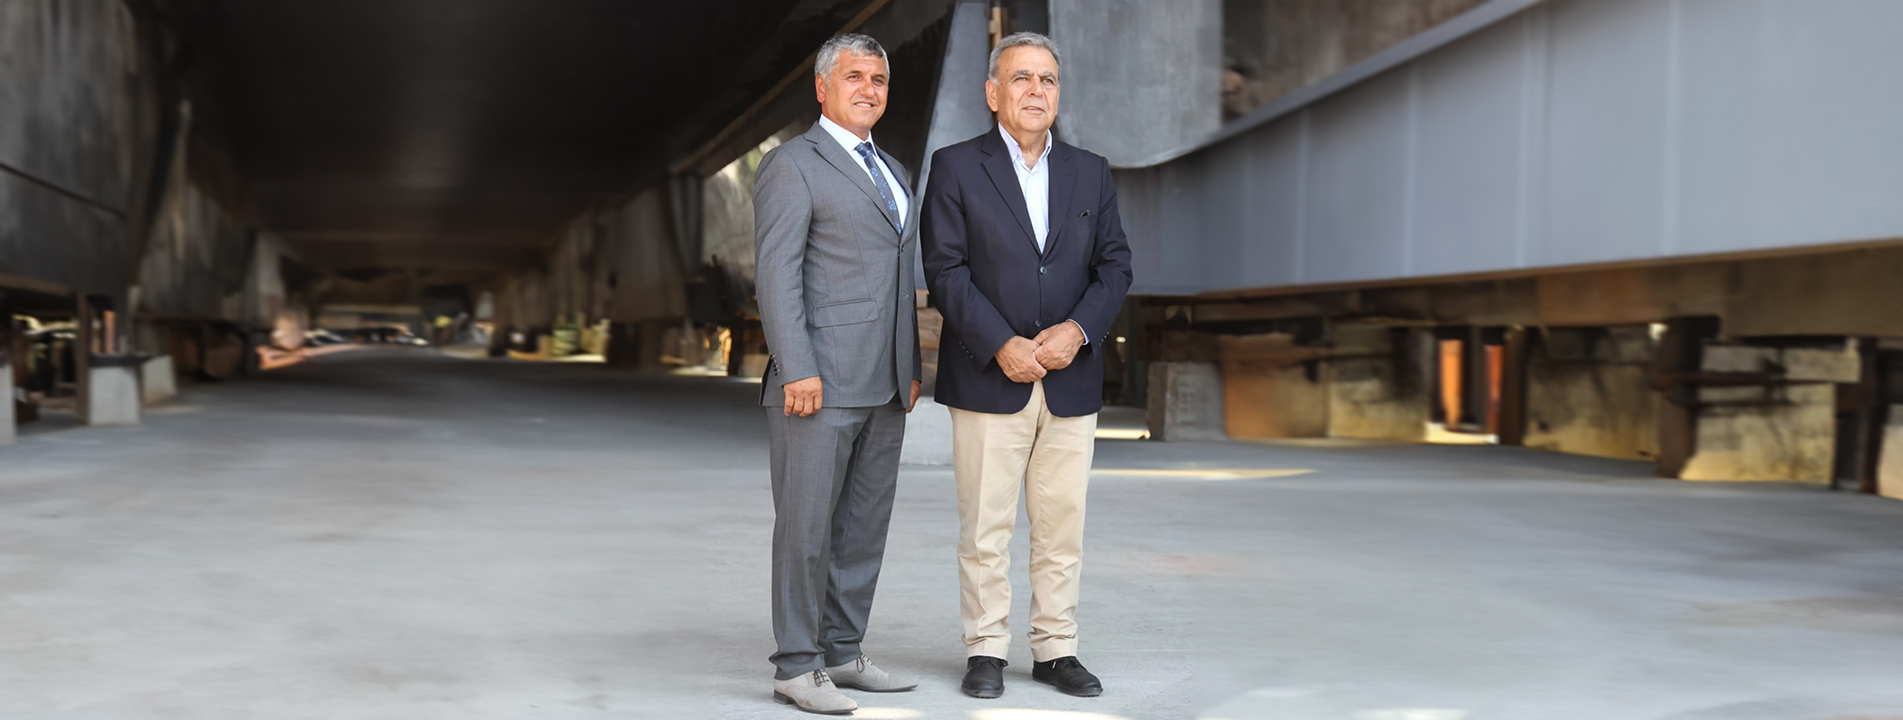 Özata Shipyard Build | Good News of Eid al-Adha from Aziz Kocaoğlu to the people of Izmir!